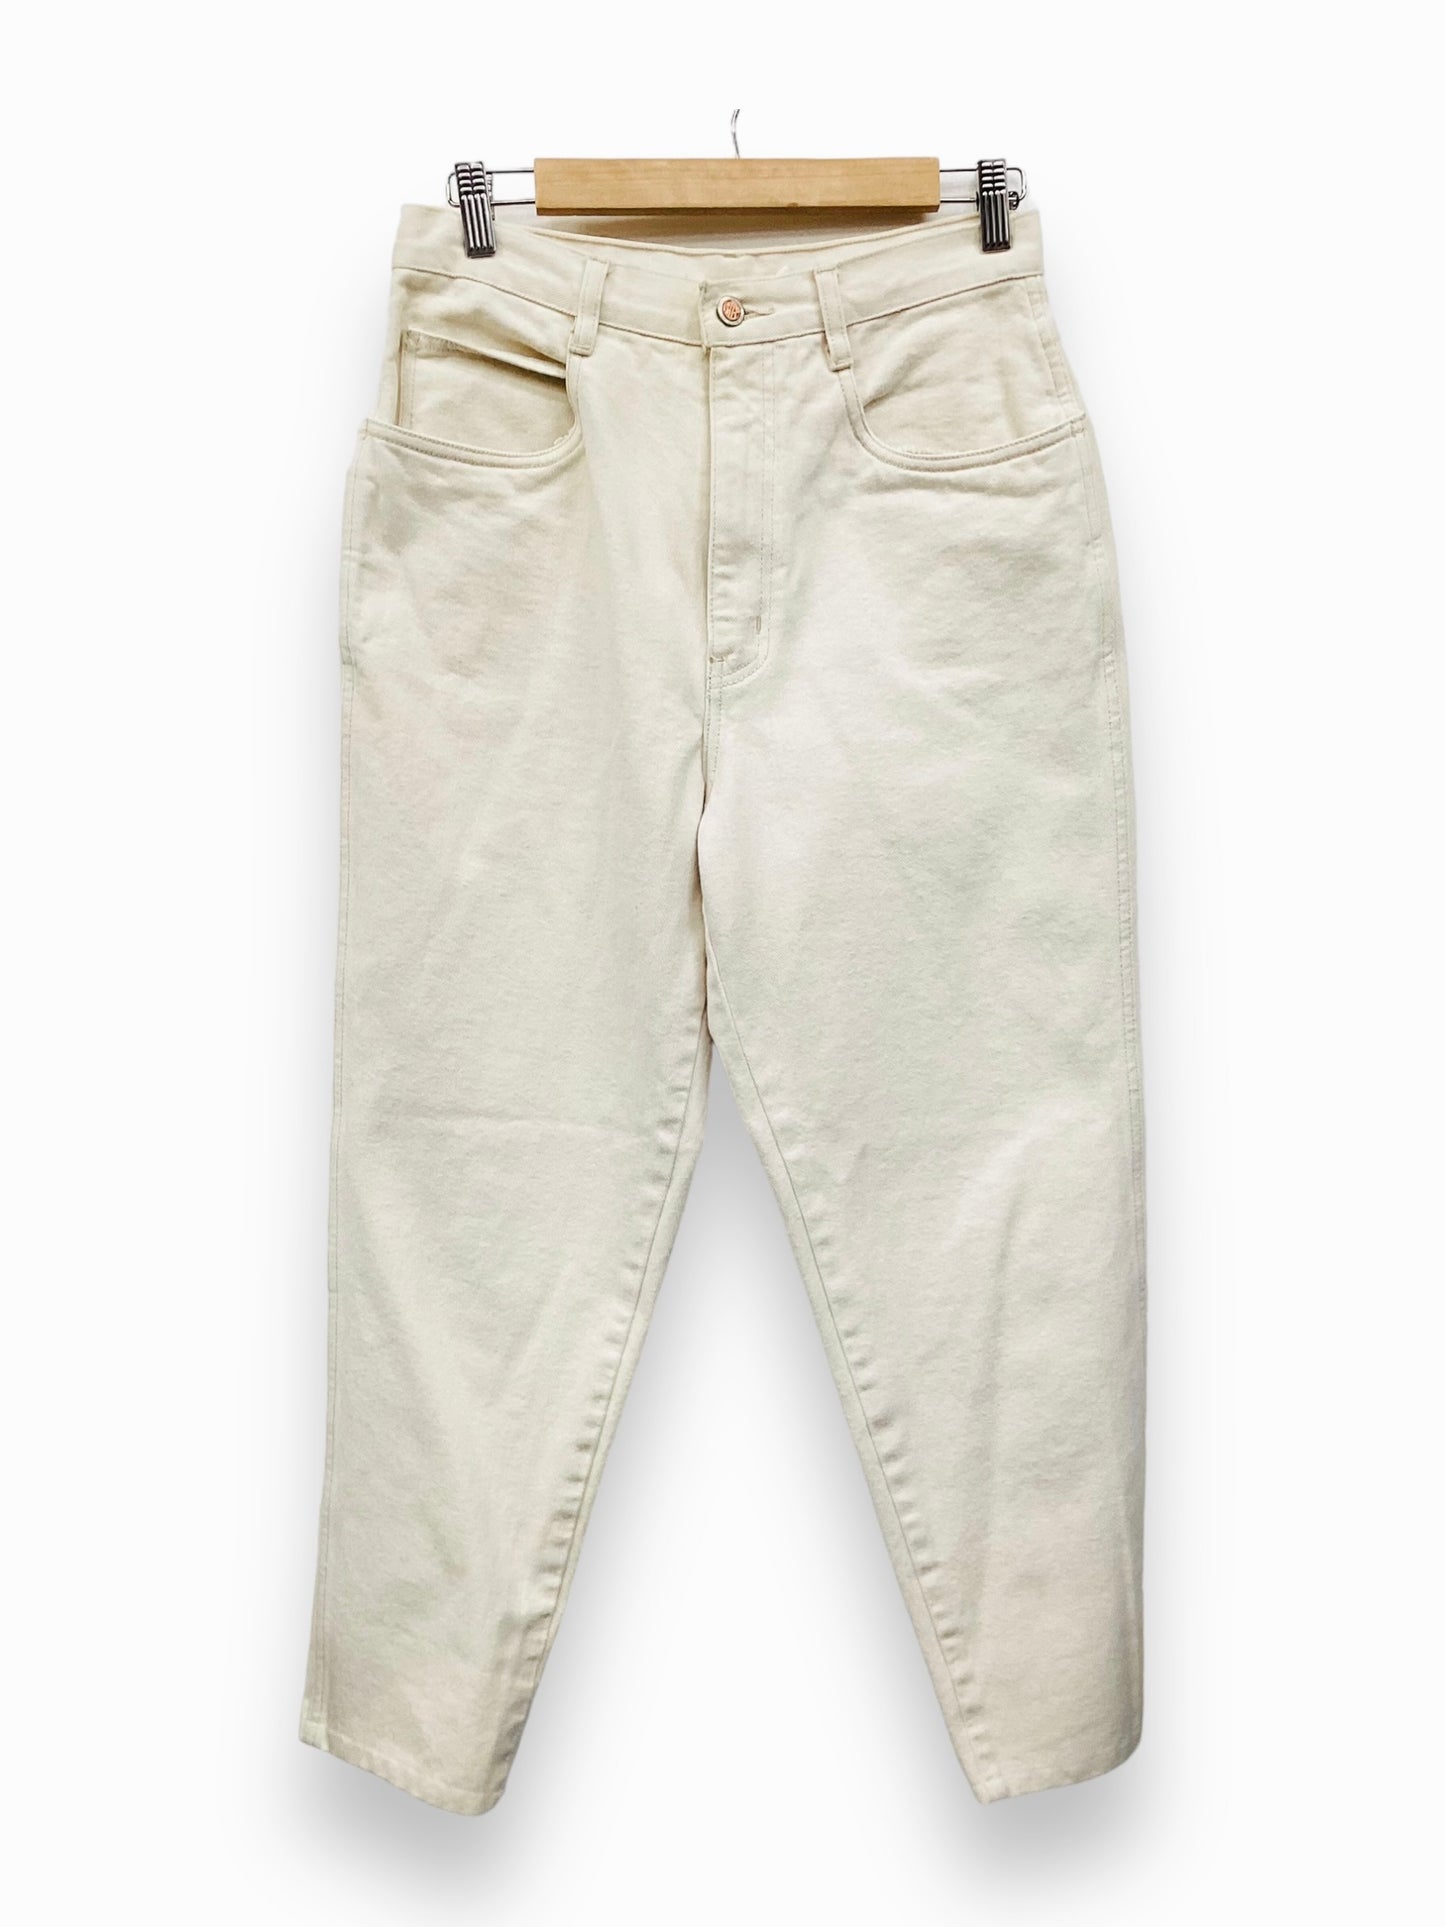 Jeans Boot Cut By Bill Blass  Size: 10